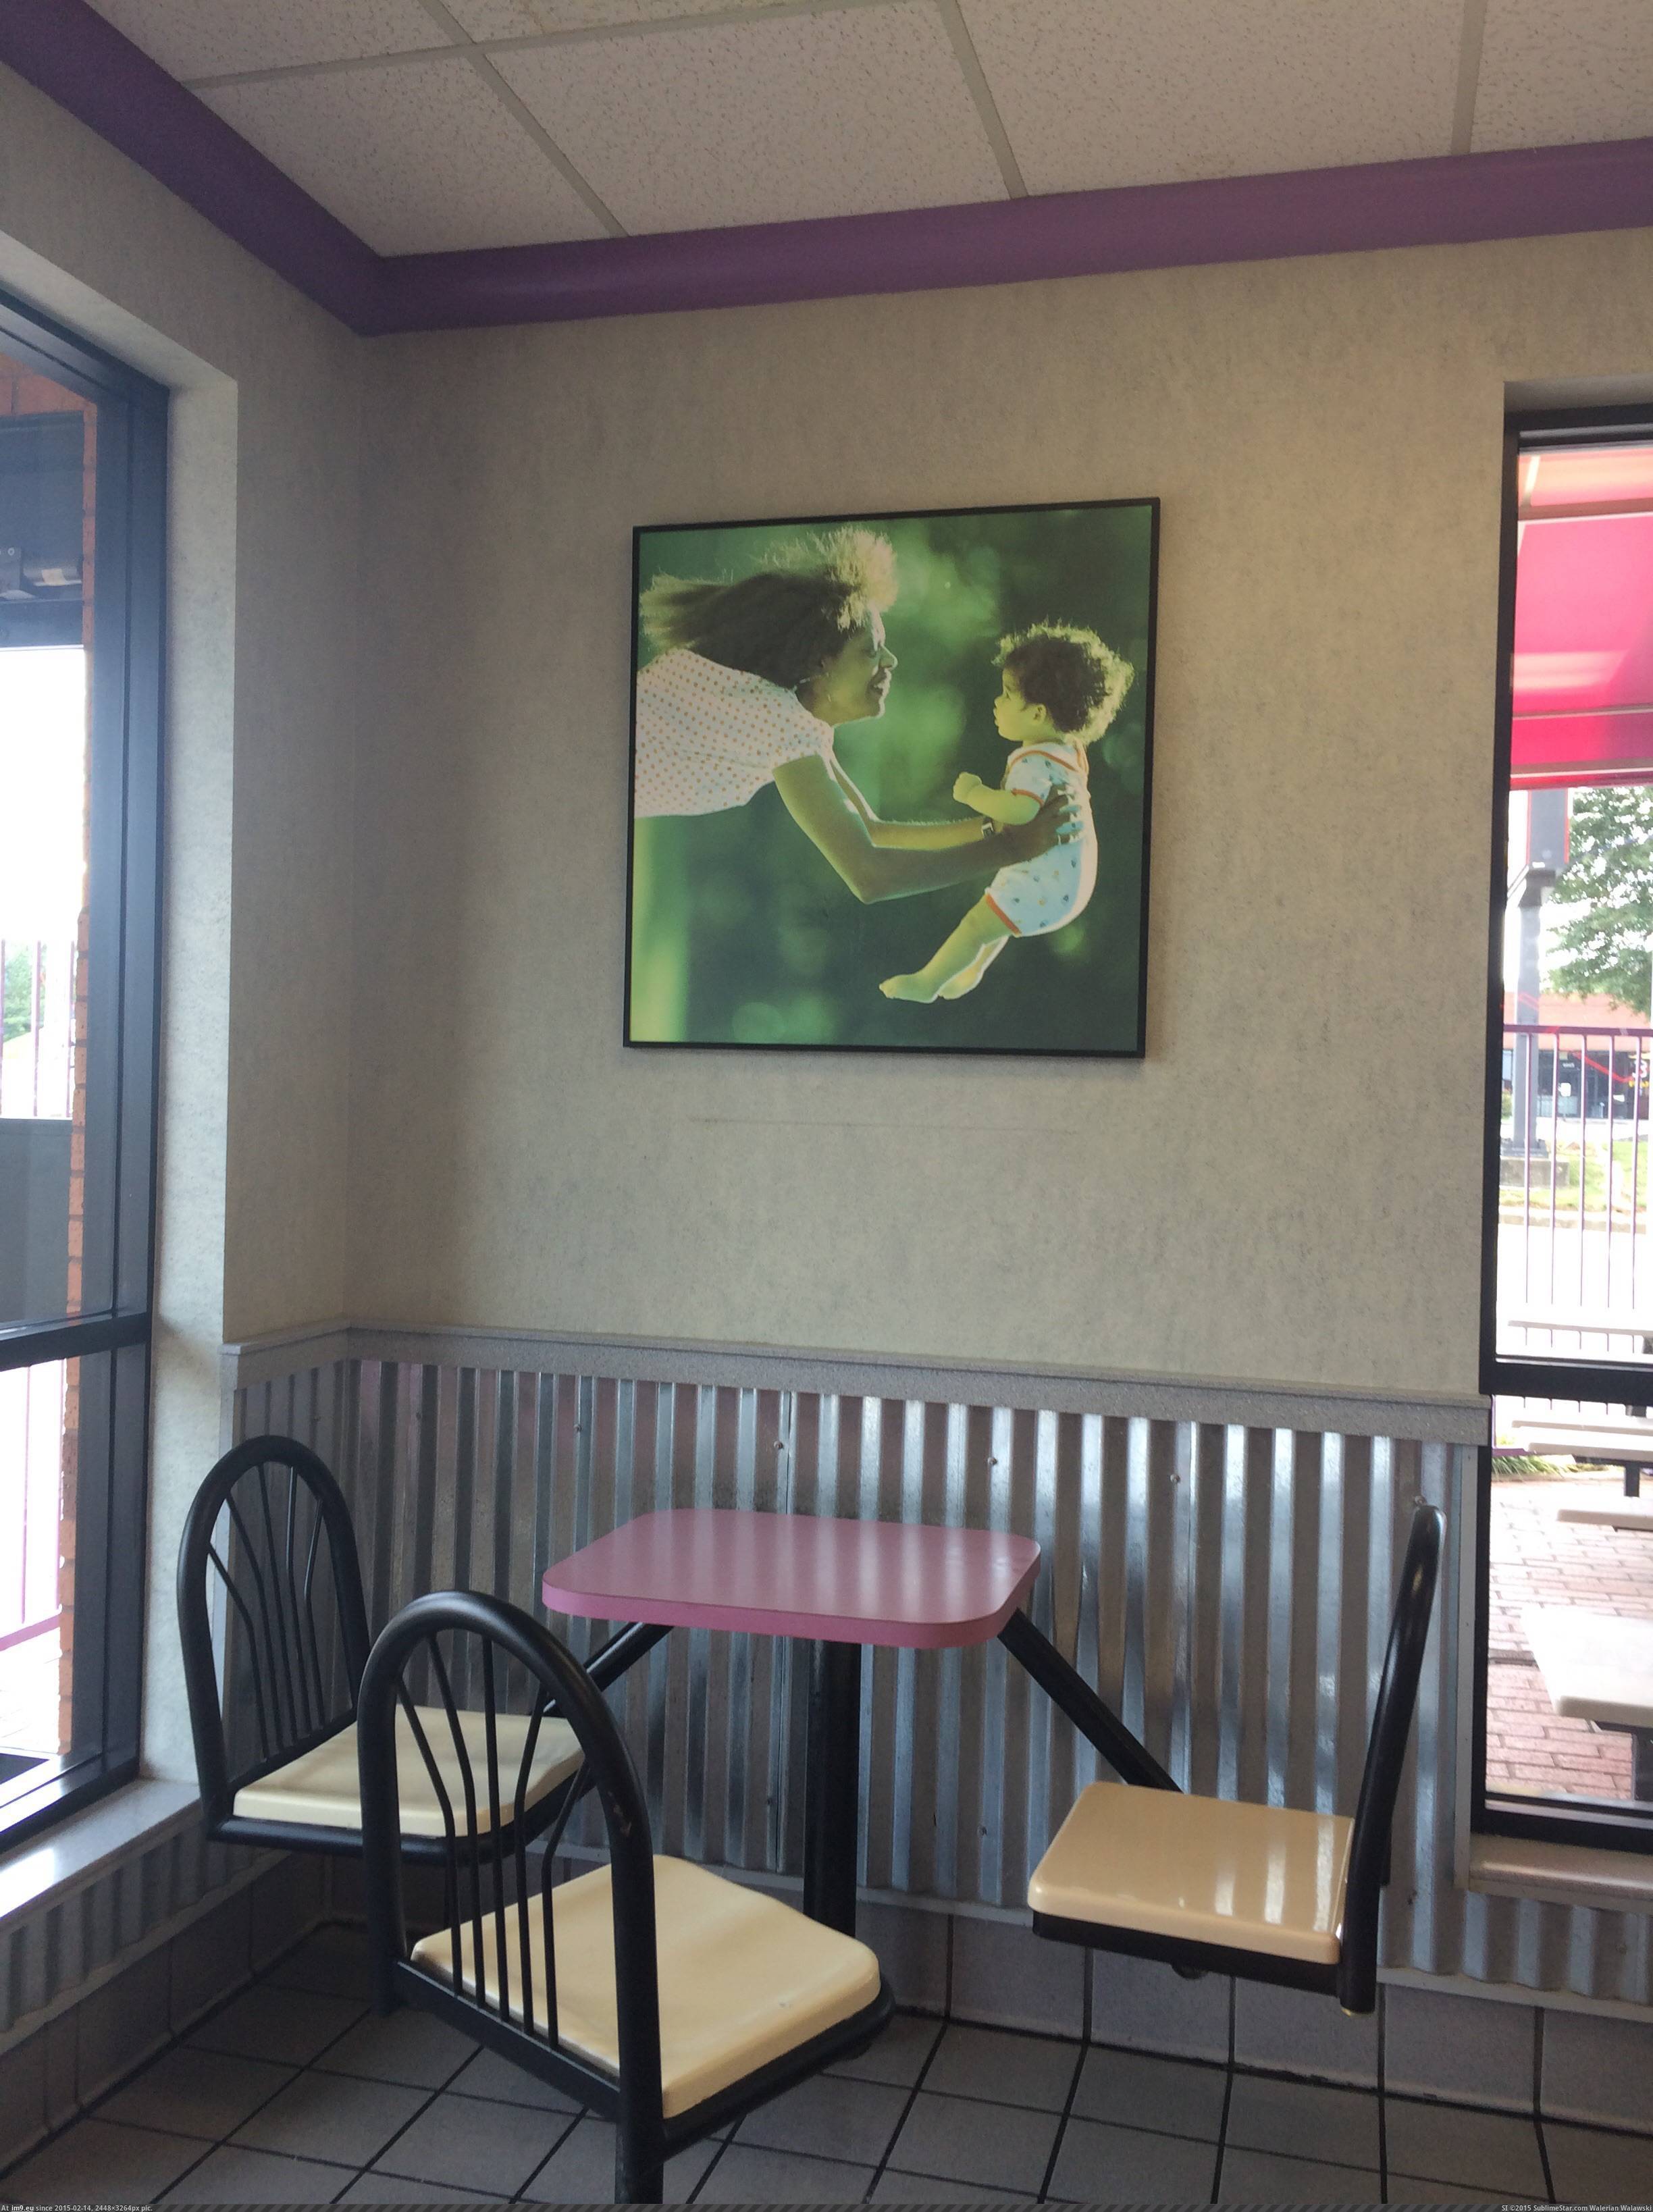 [Mildlyinteresting] This picture in McDonald's was hung sideways. (in My r/MILDLYINTERESTING favs)